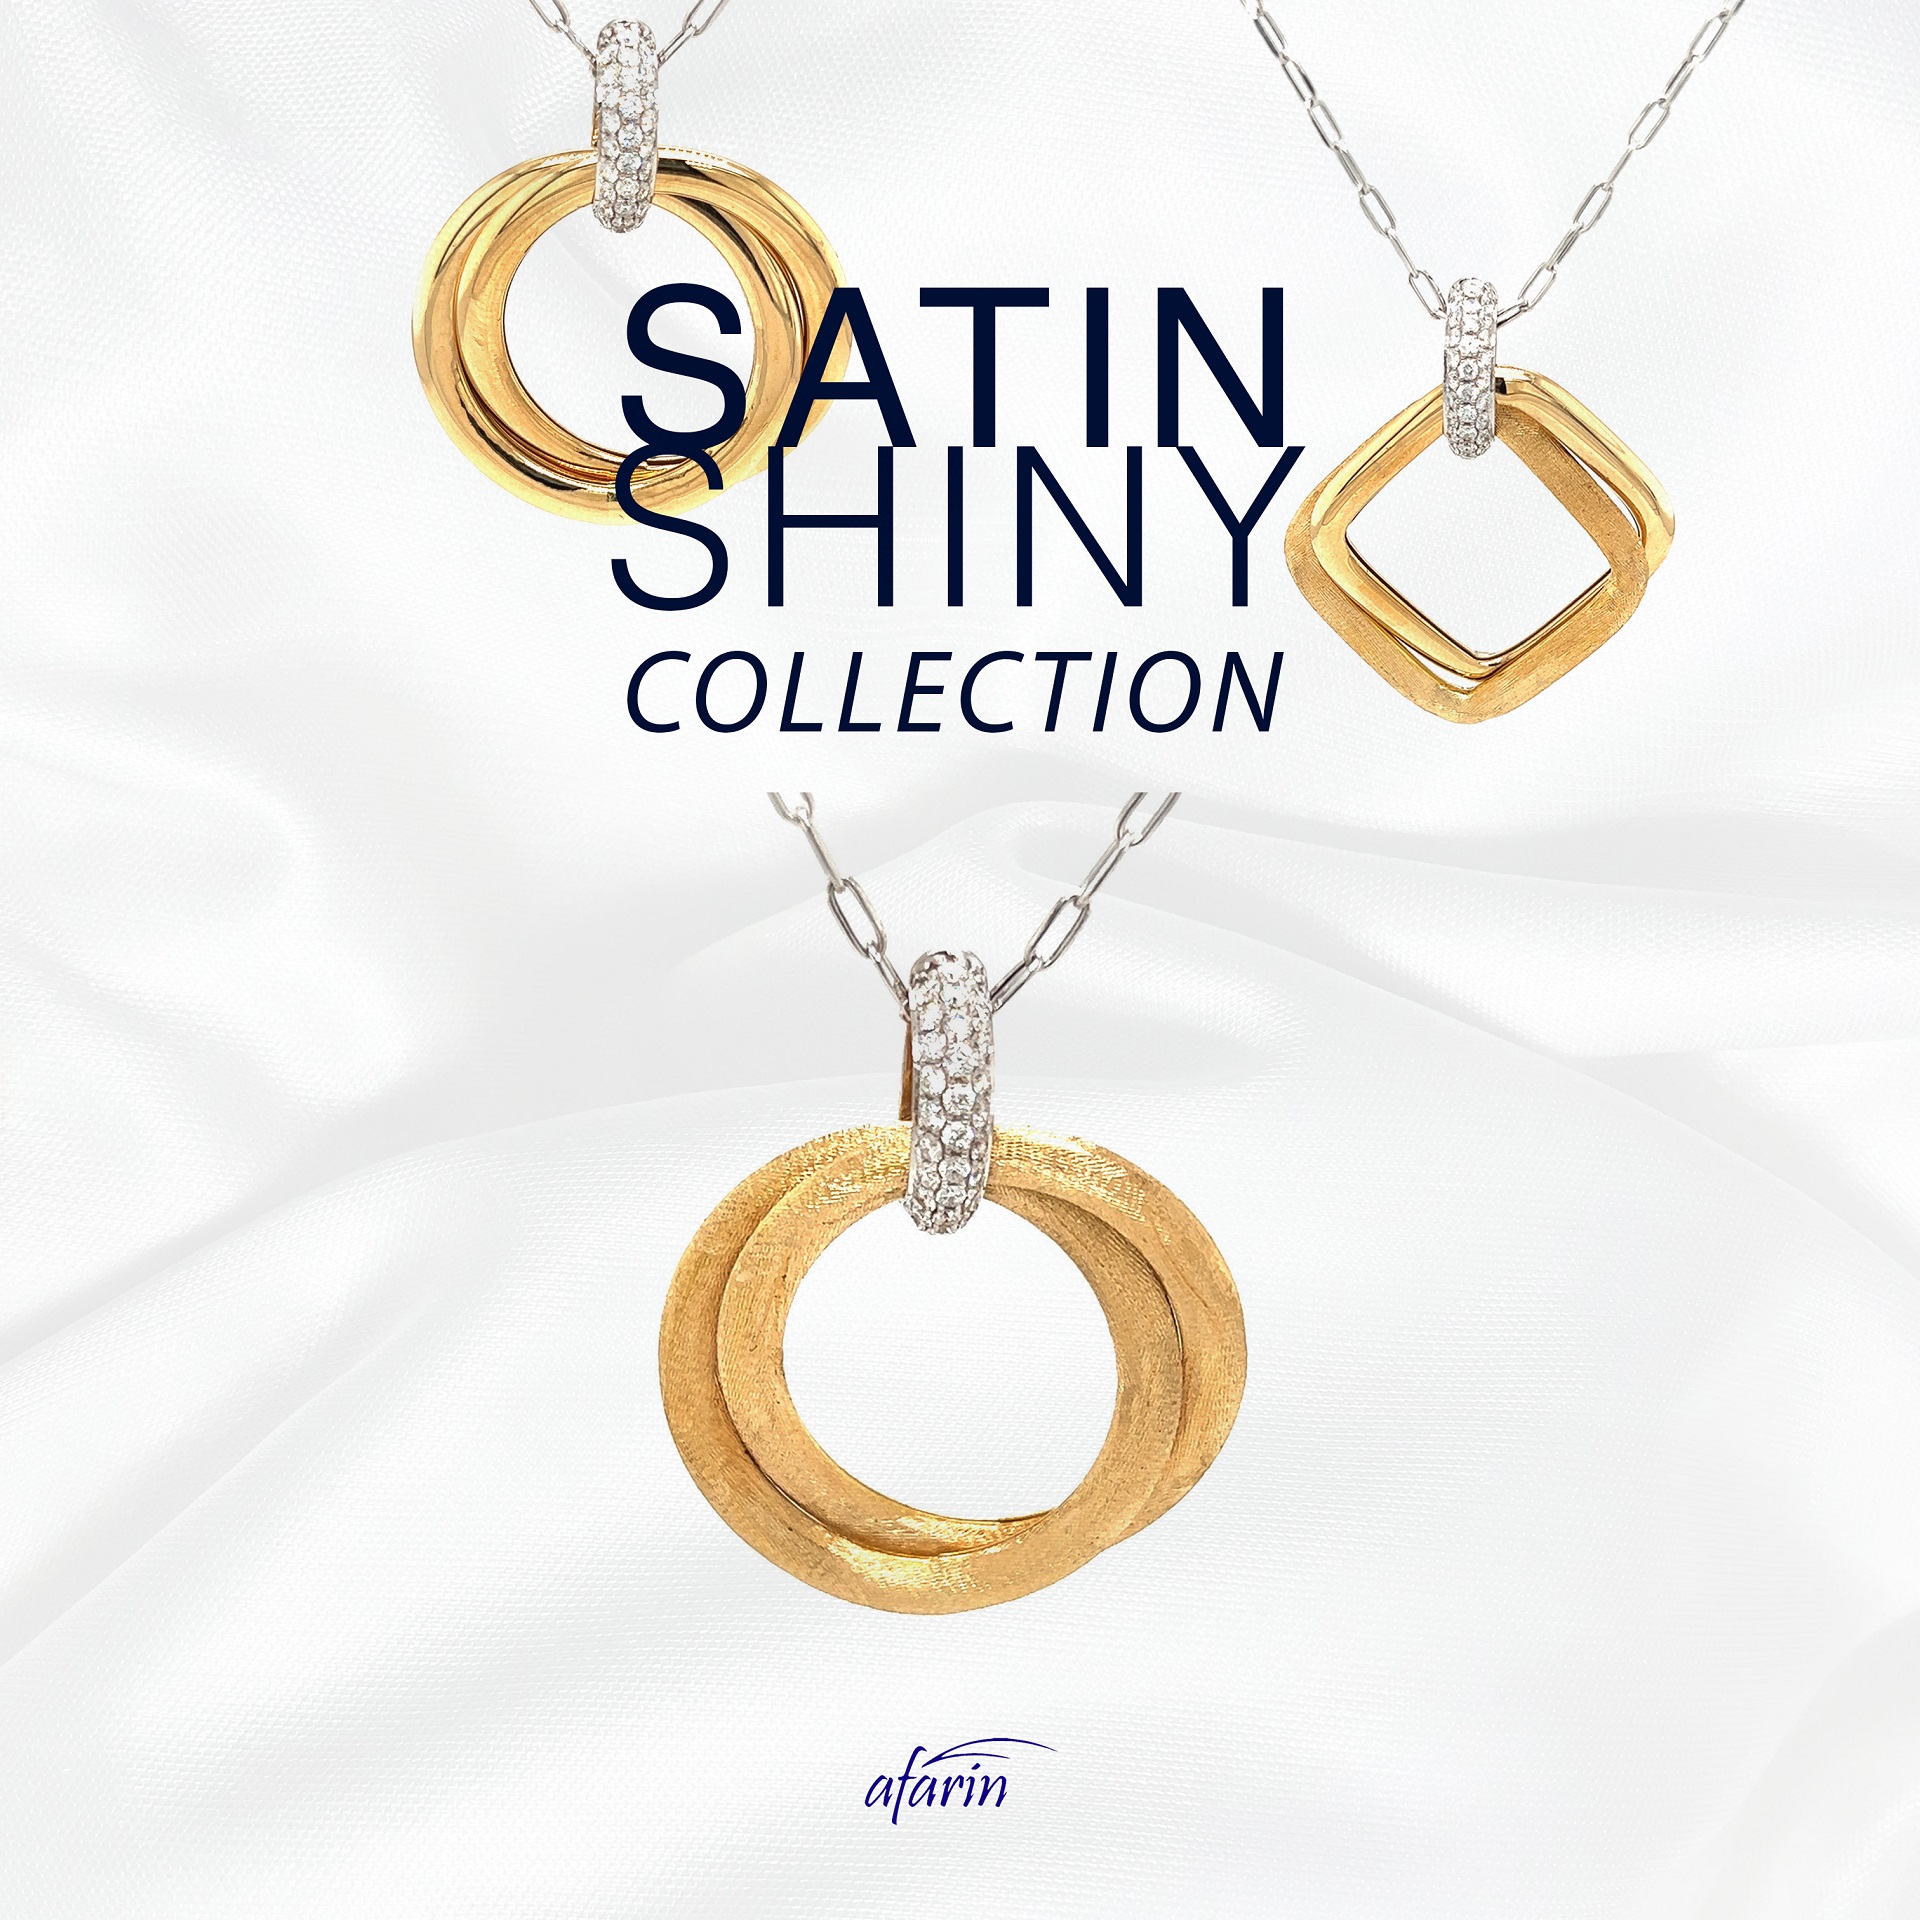 Satin Shiny collection